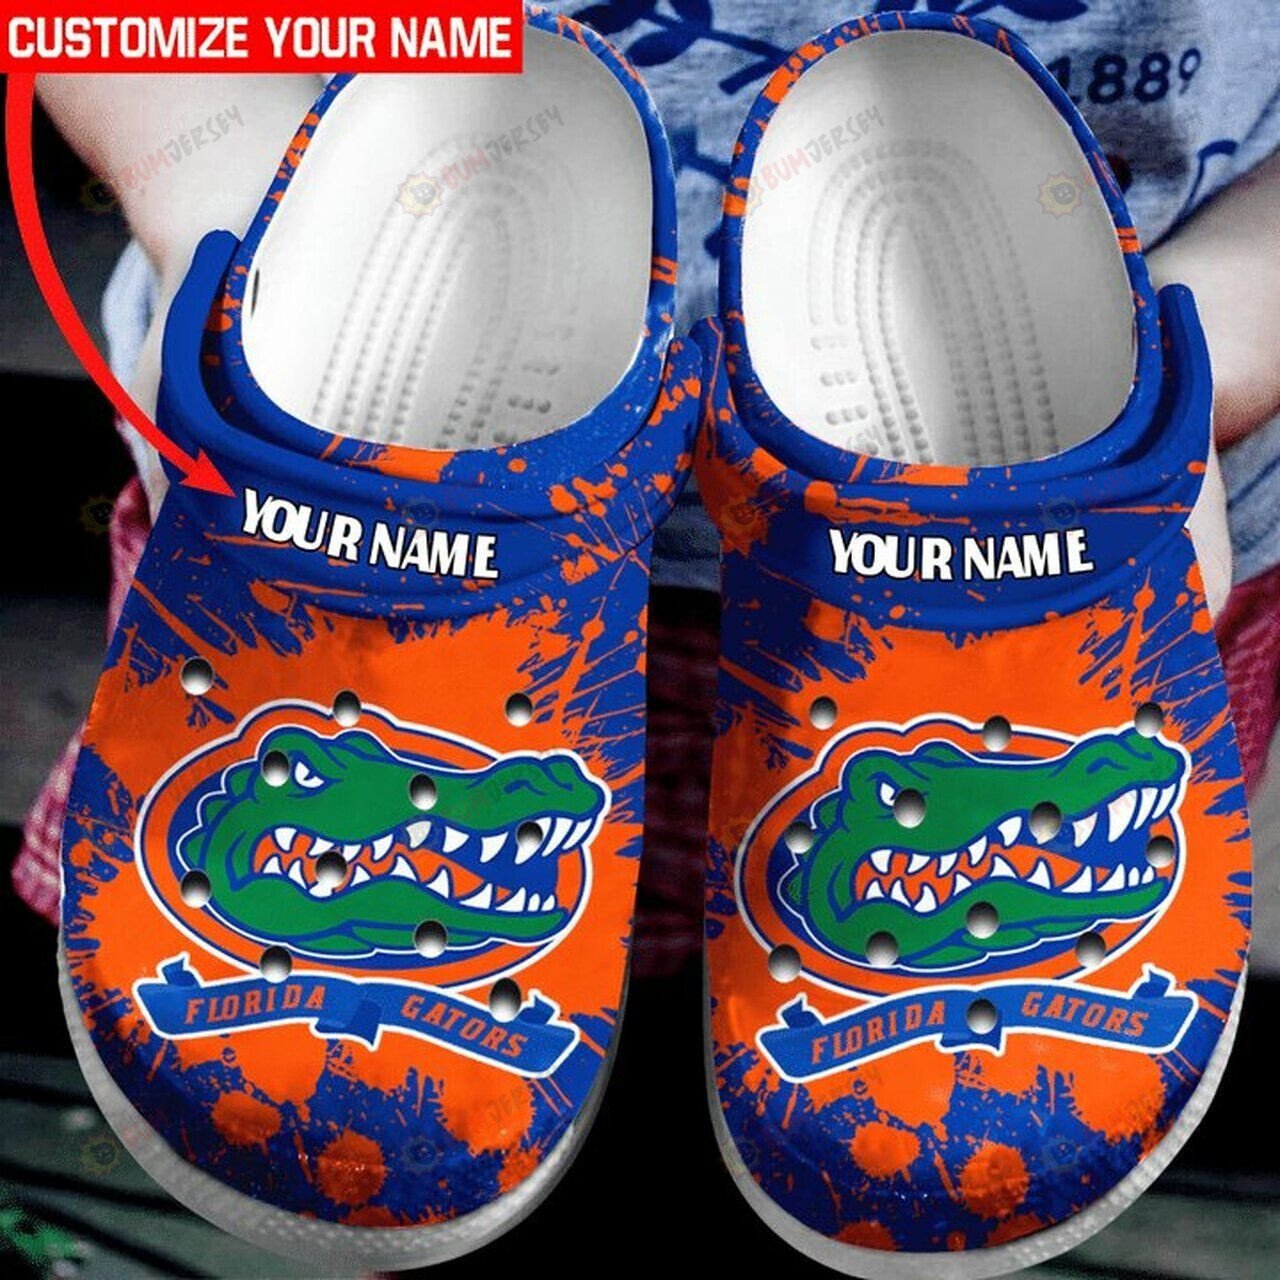 Florida Gators NCAAF Football Teams Custom Name Crocs Crocband Clog Comfortable Water Shoes